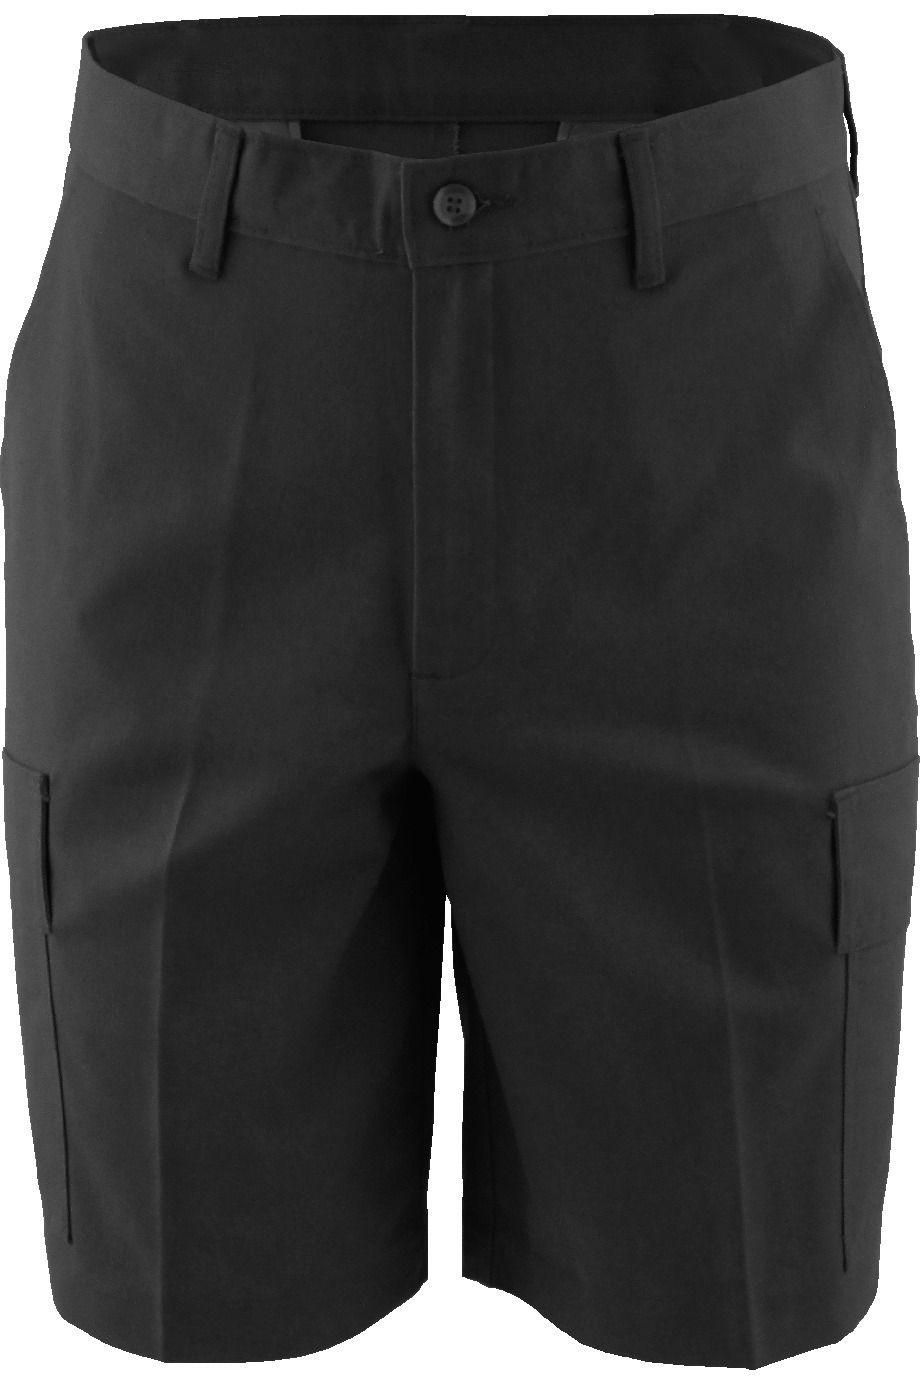 Edwards Garment 2475 - Men's Cargo Short